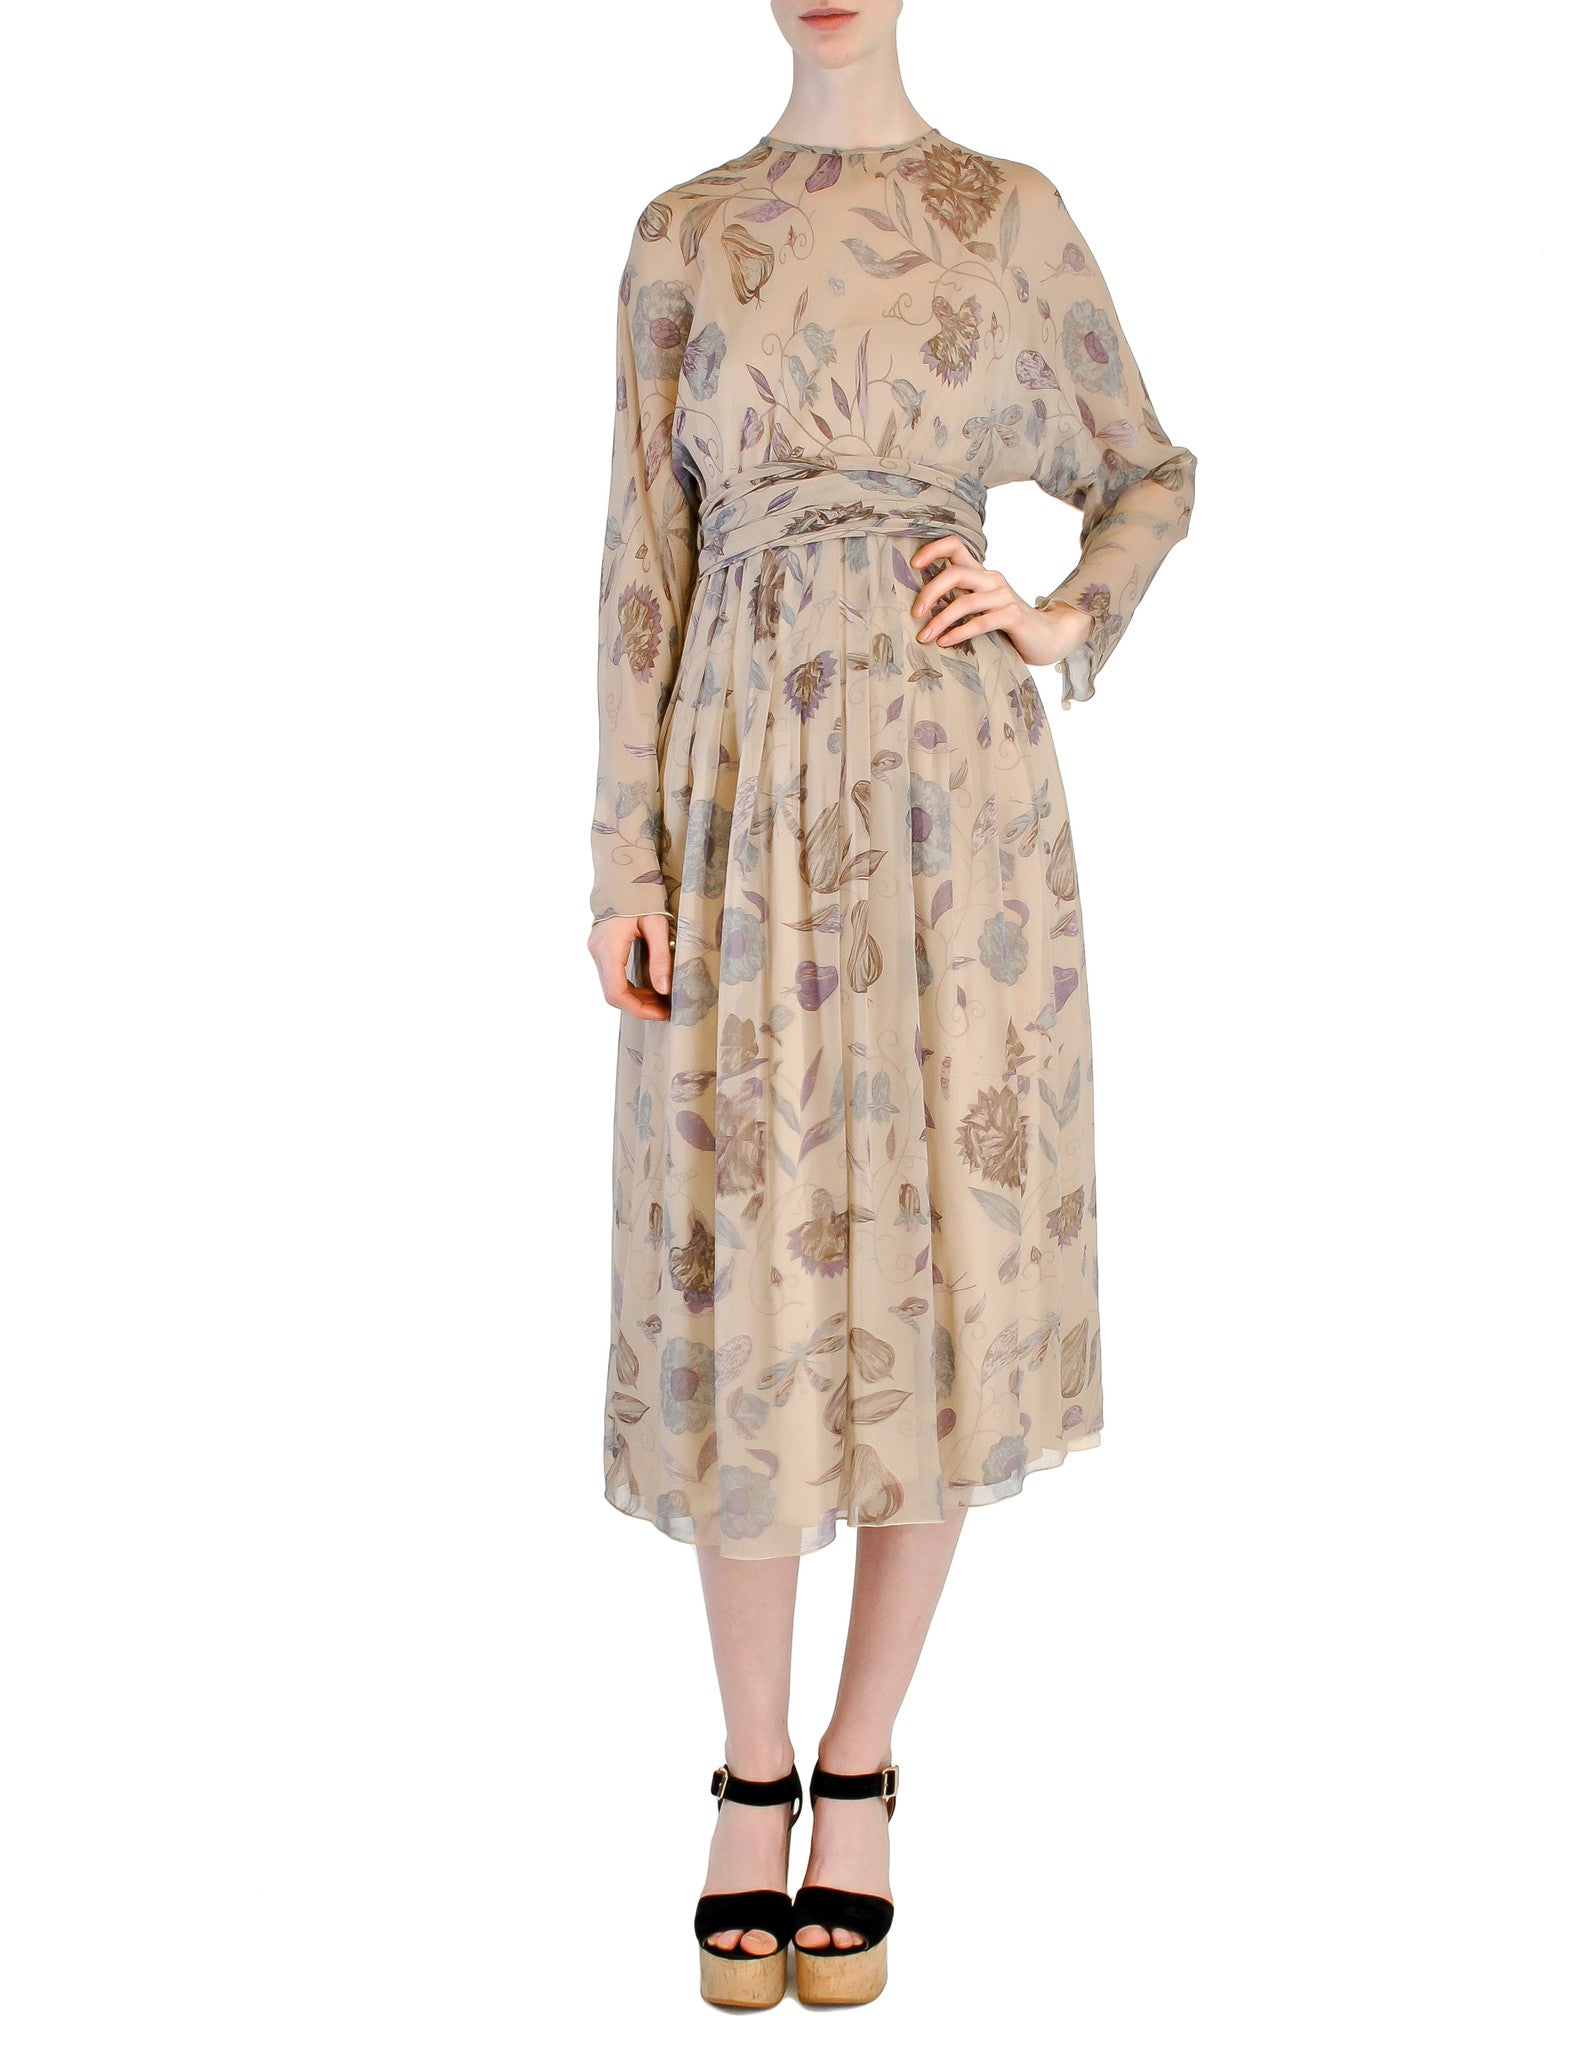 silk chiffon floral dress